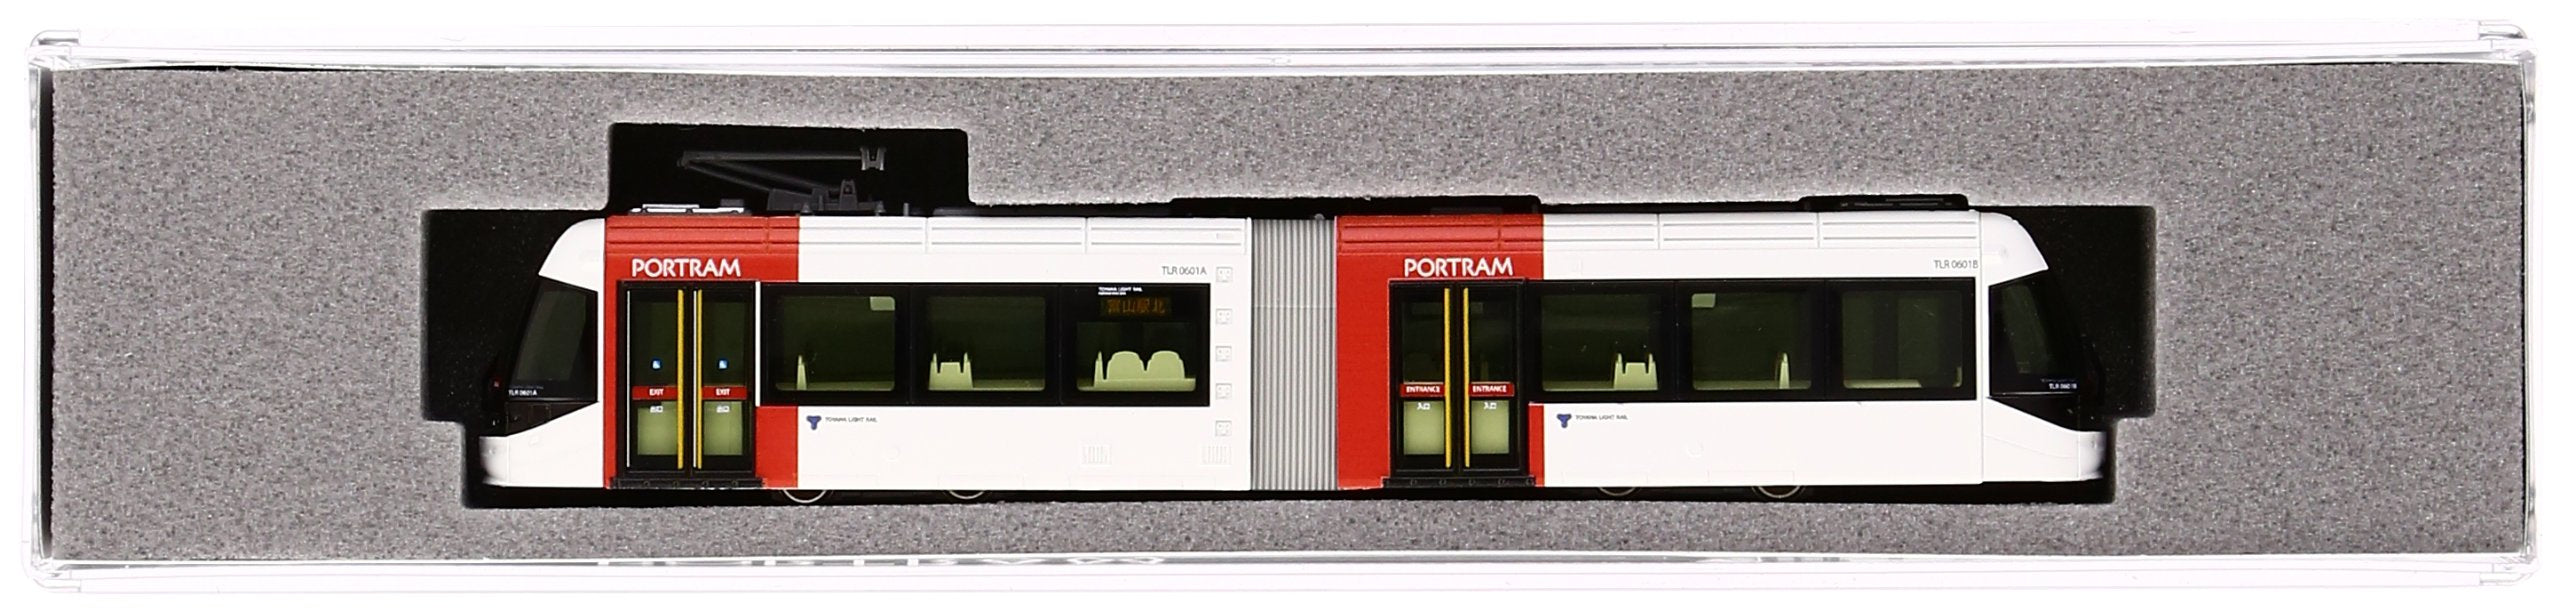 Kato Red TLR0601 Toyama Light Rail N Gauge Railway Model Train 14-801-1